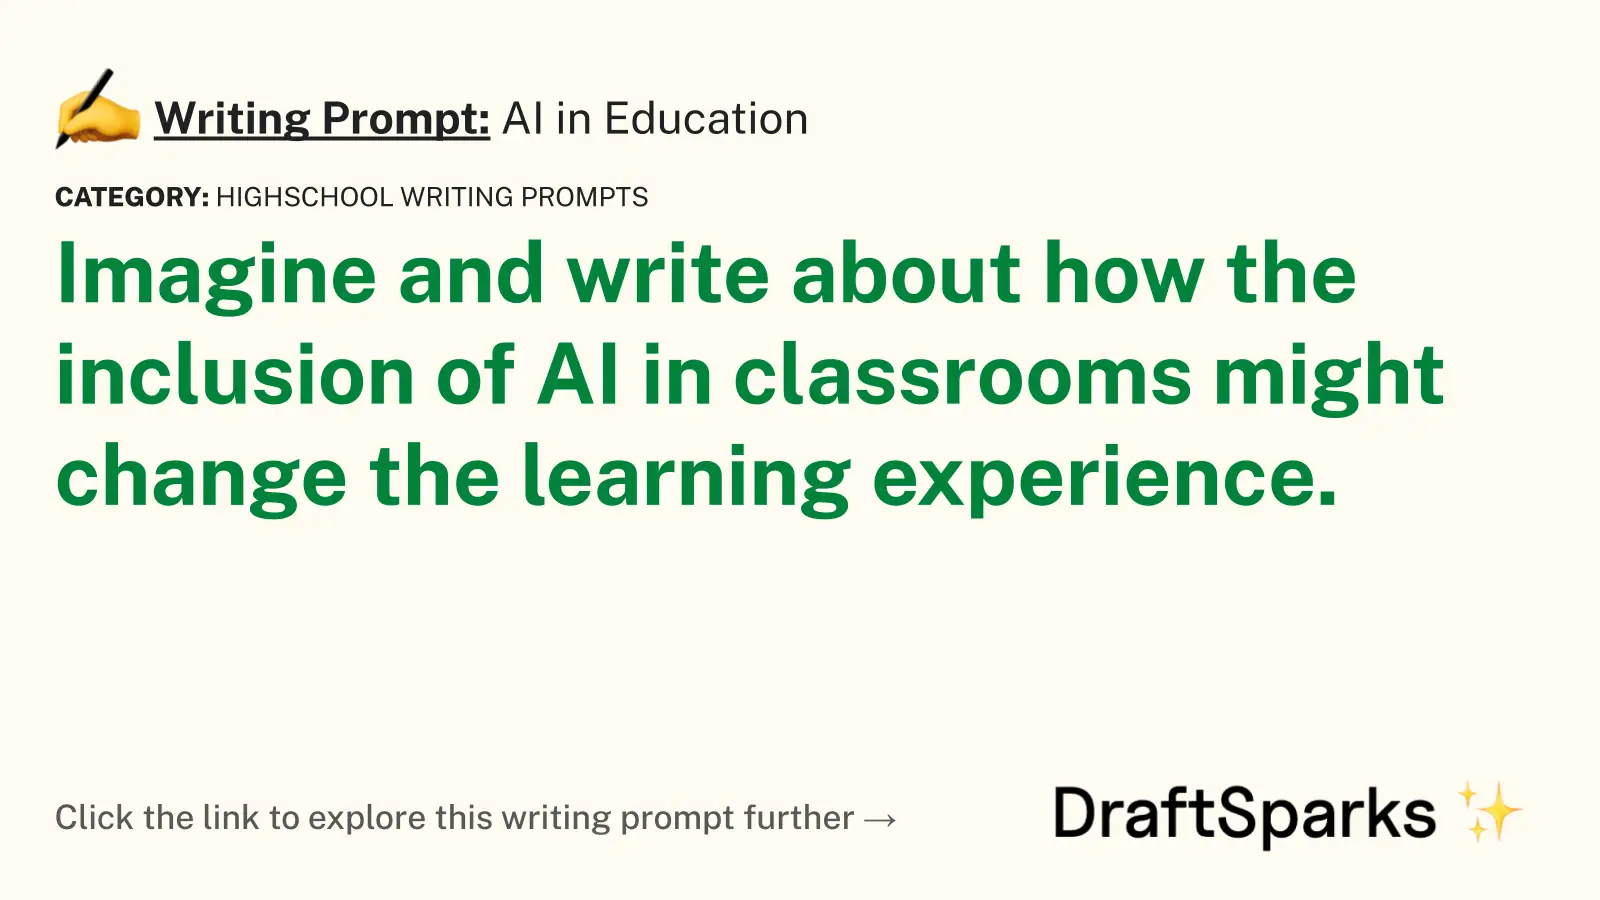 AI in Education